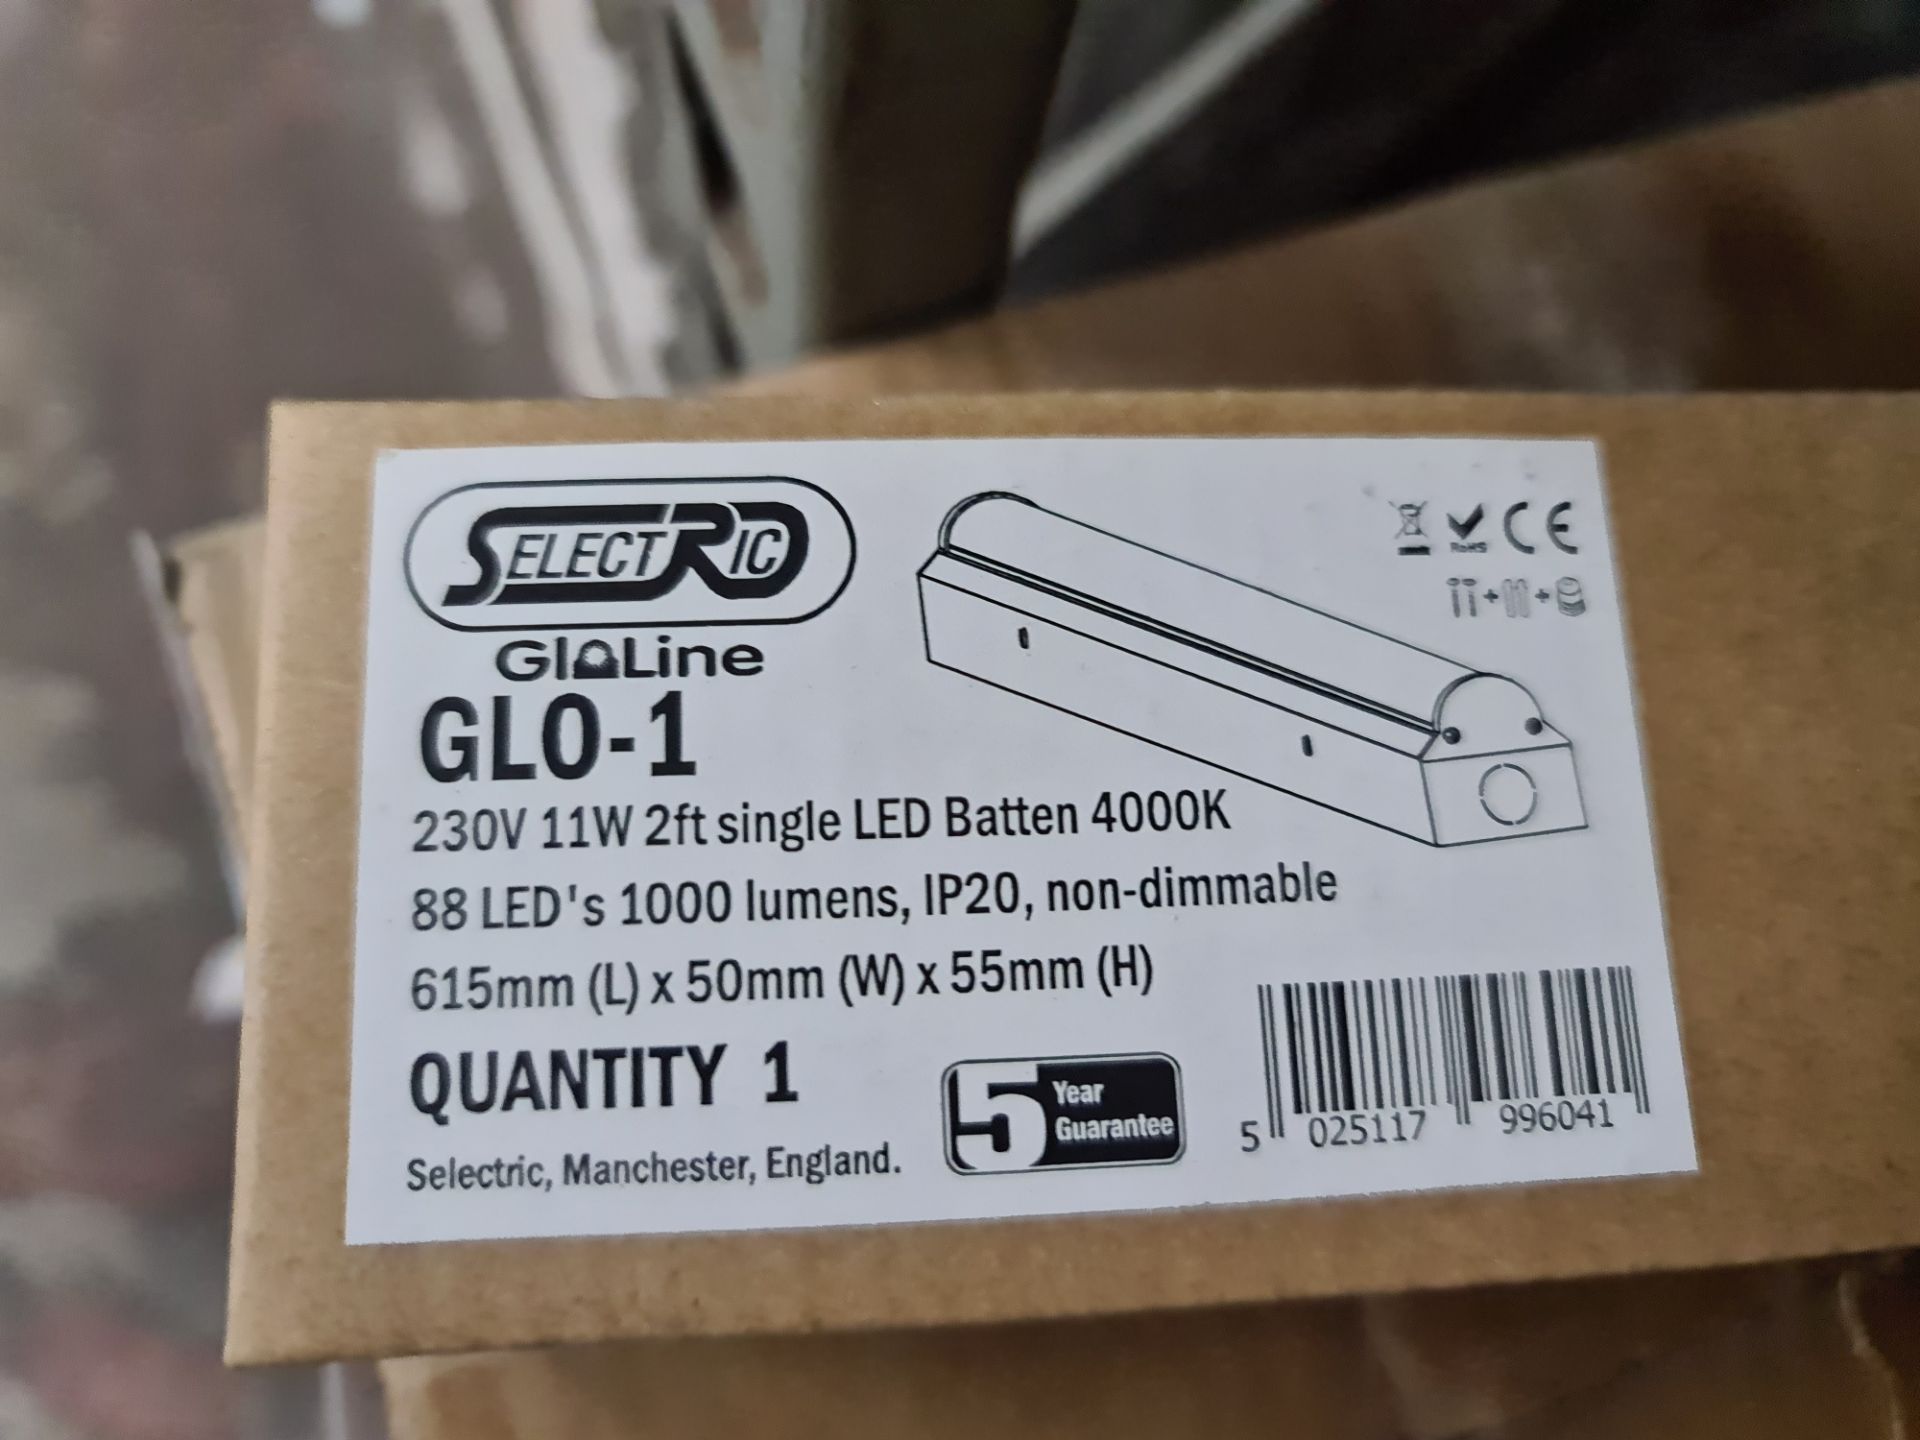 32 off Selectric Gloline model Glo-1 230v 11w 2ft single LED 4000k batten lights, IP20